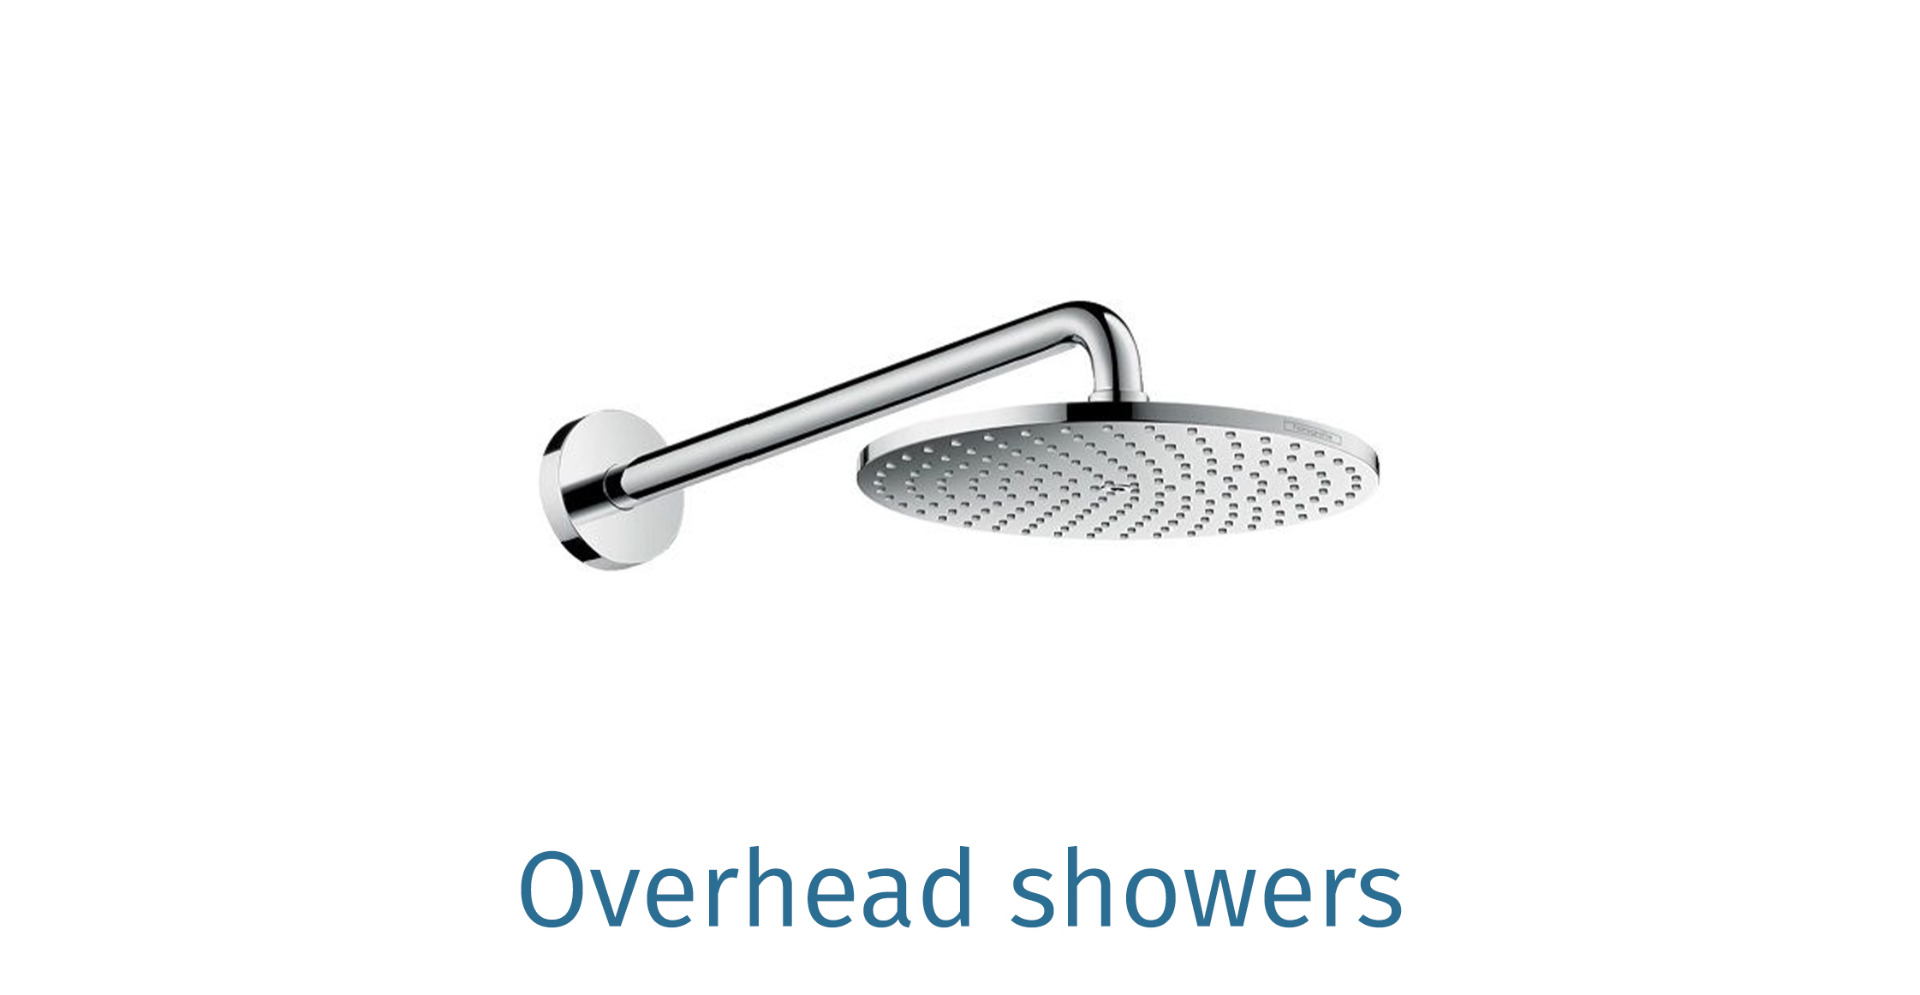 Overhead showers